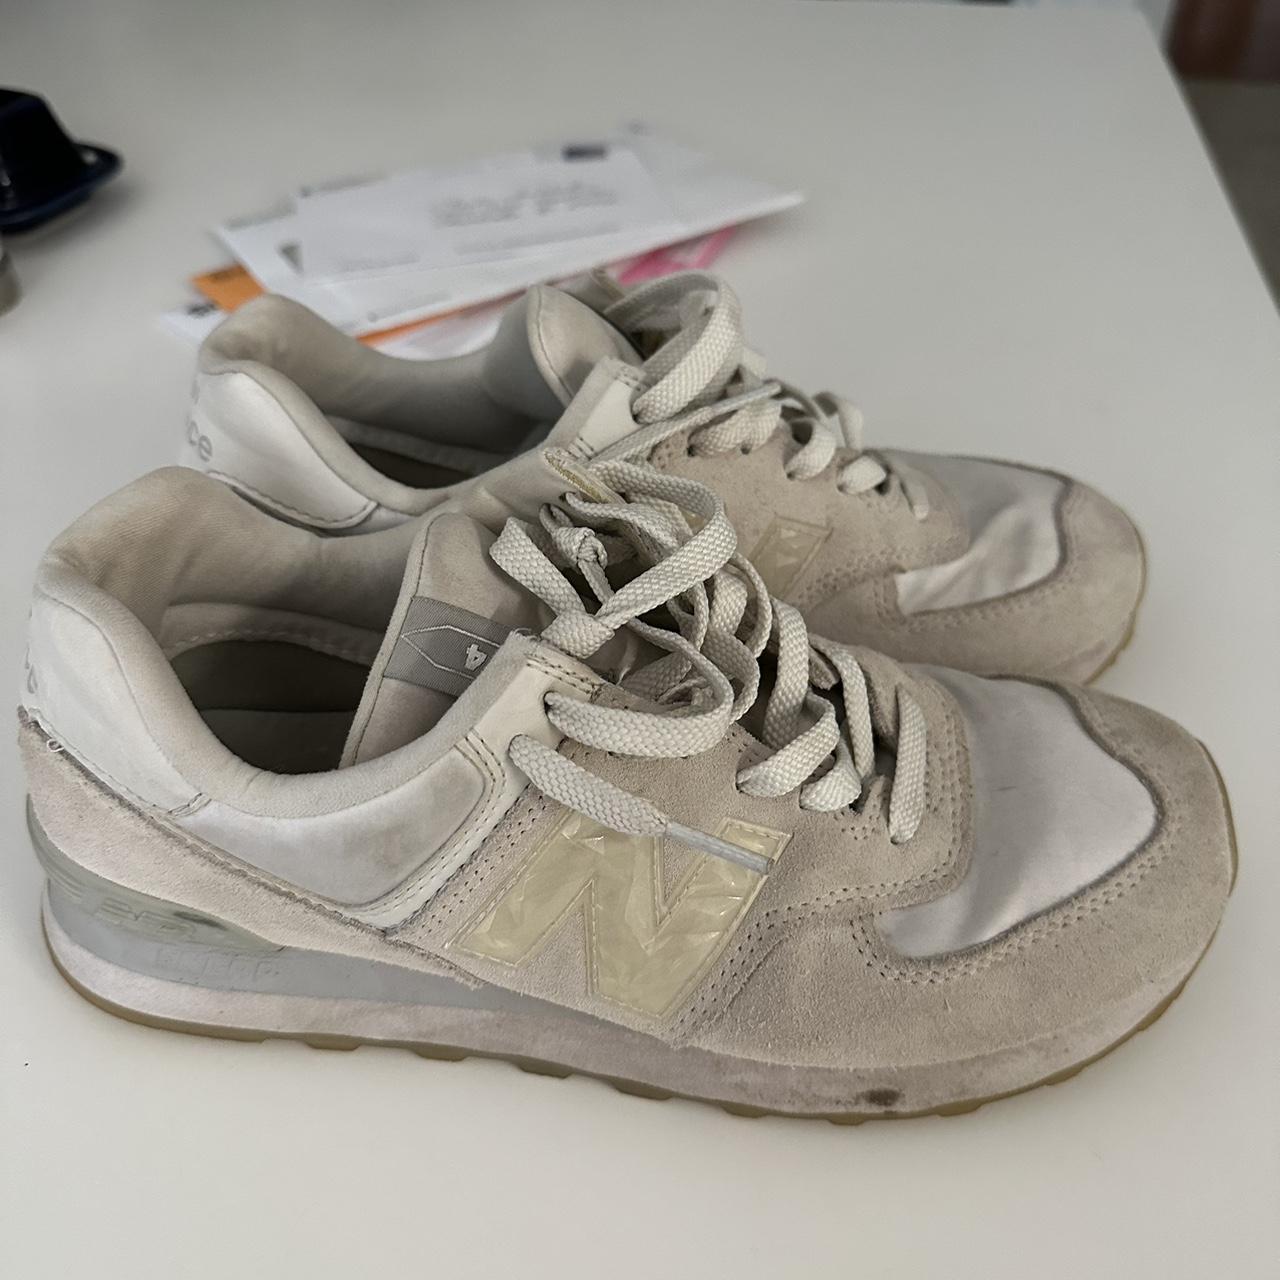 Grey new balance sneaker - Depop